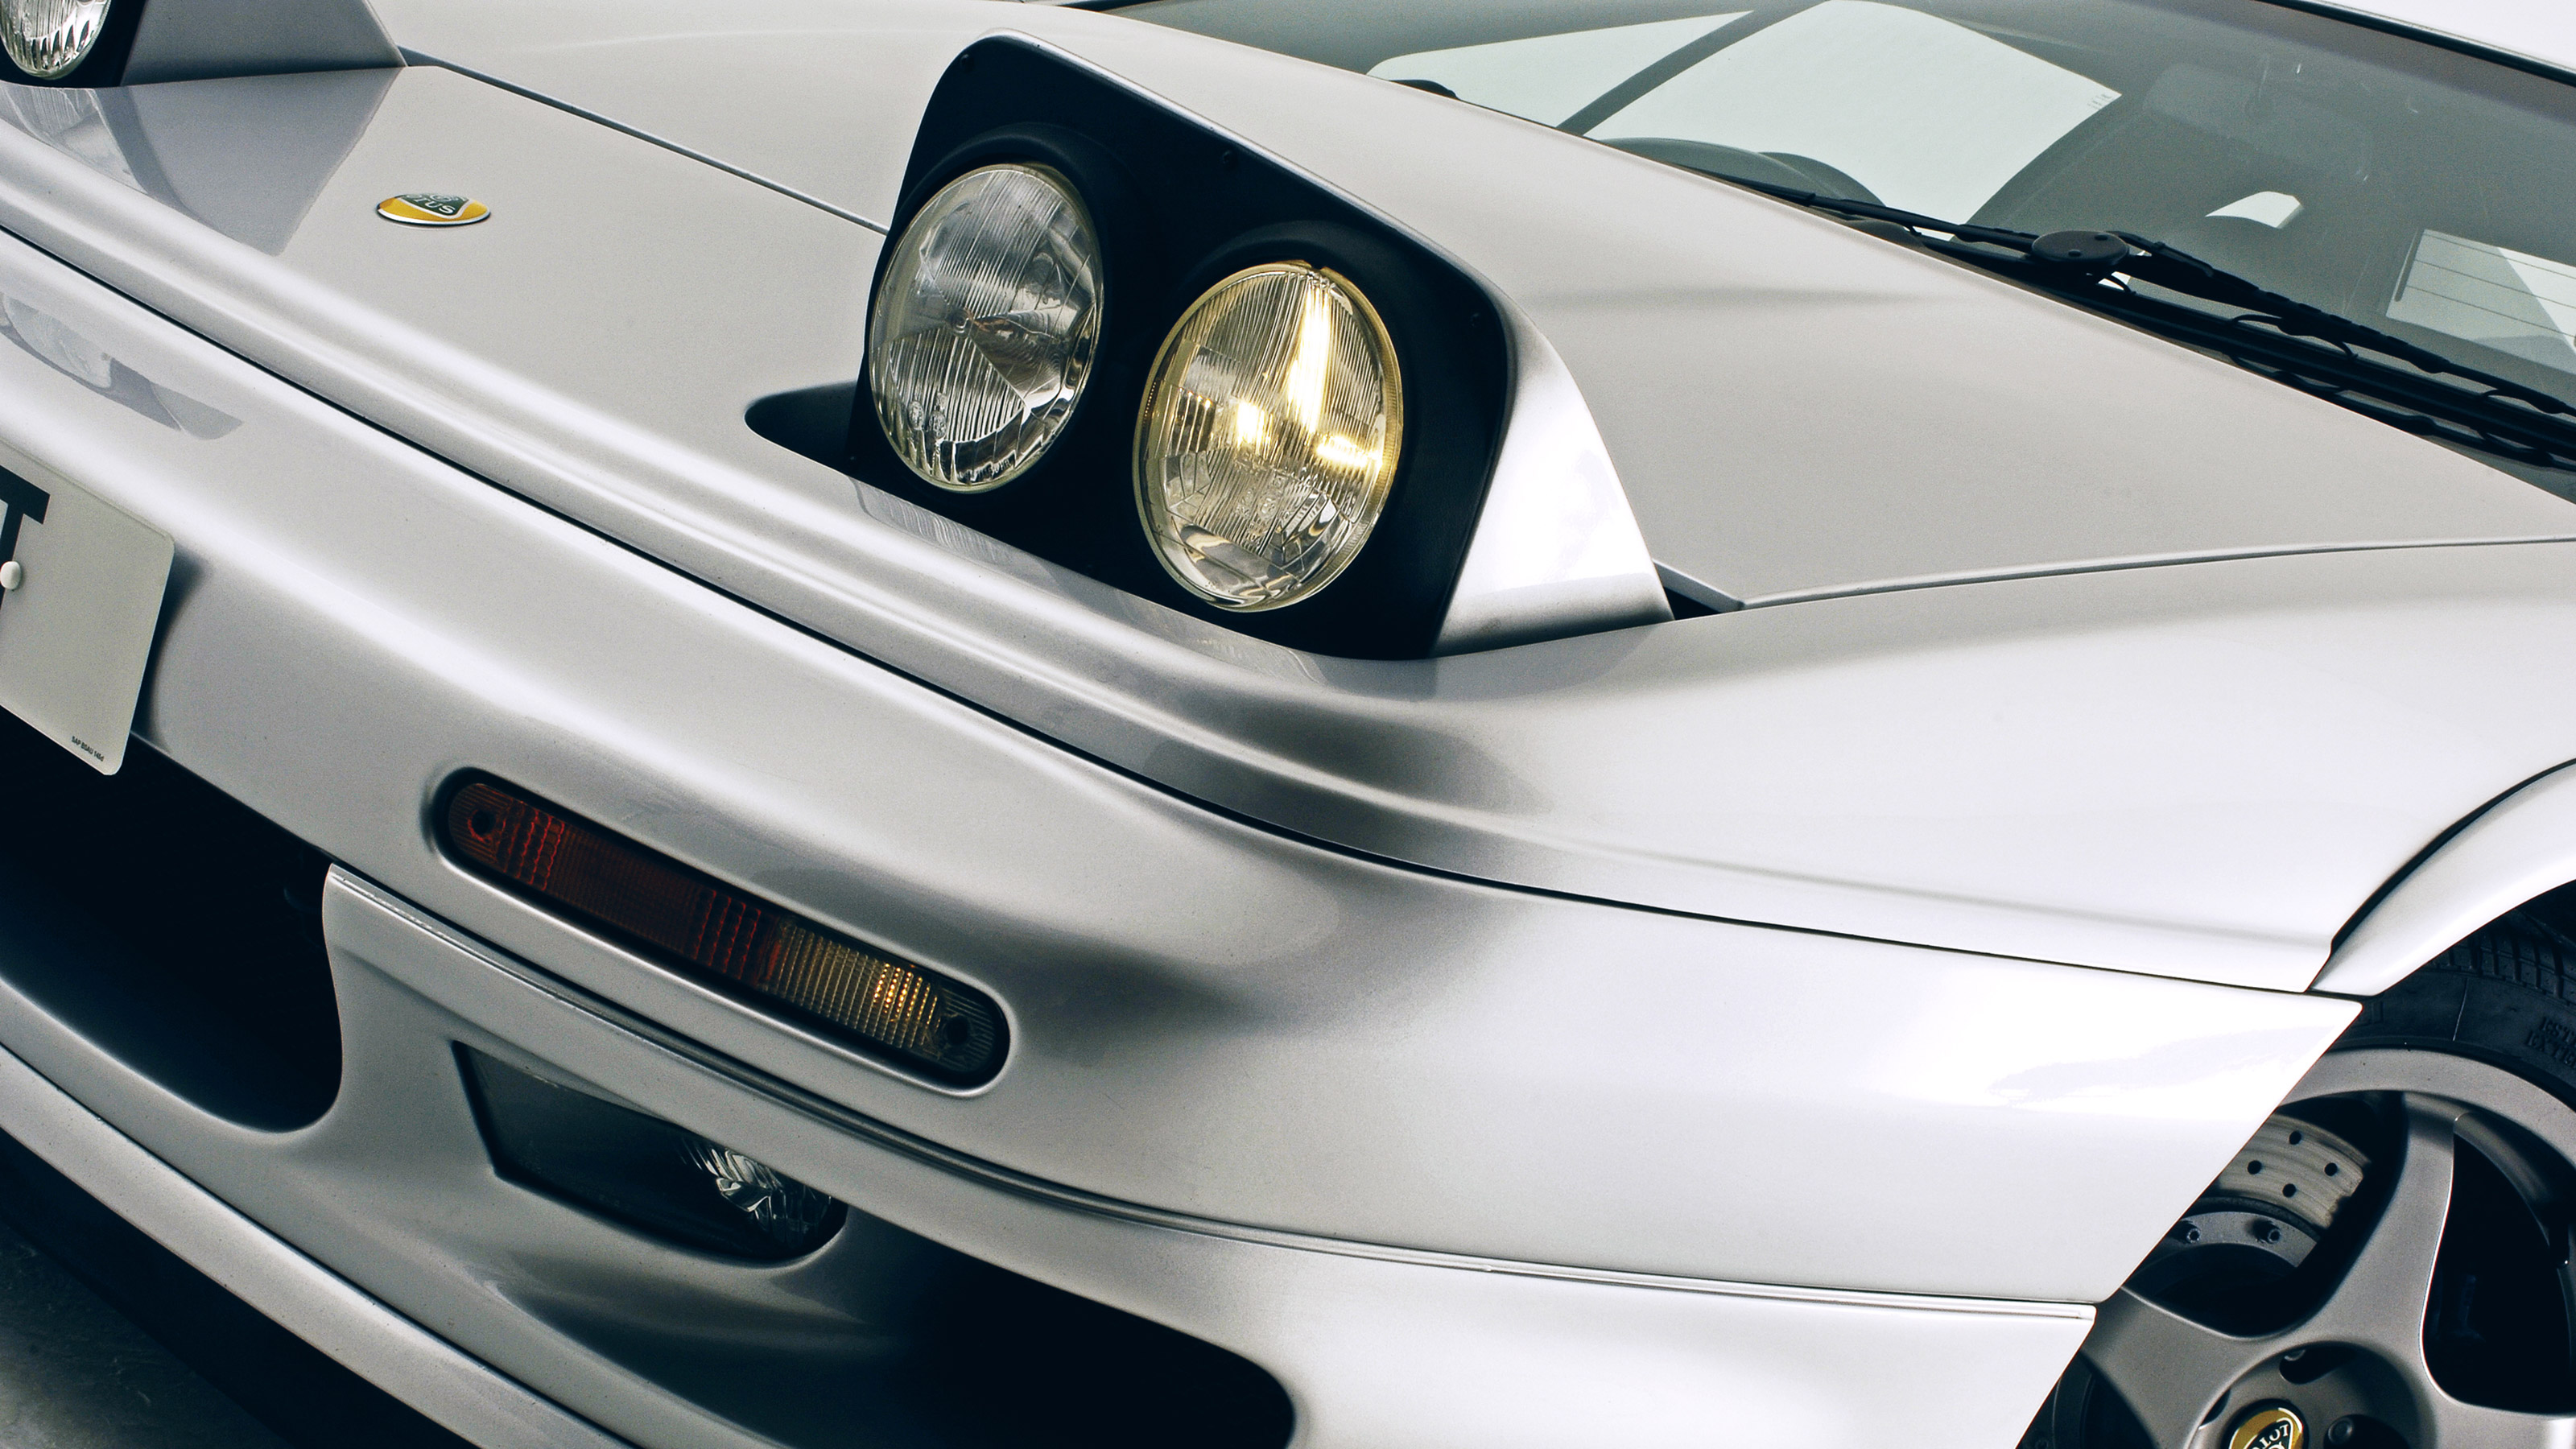 Lotus Esprit pop-up headlights - Art of Speed